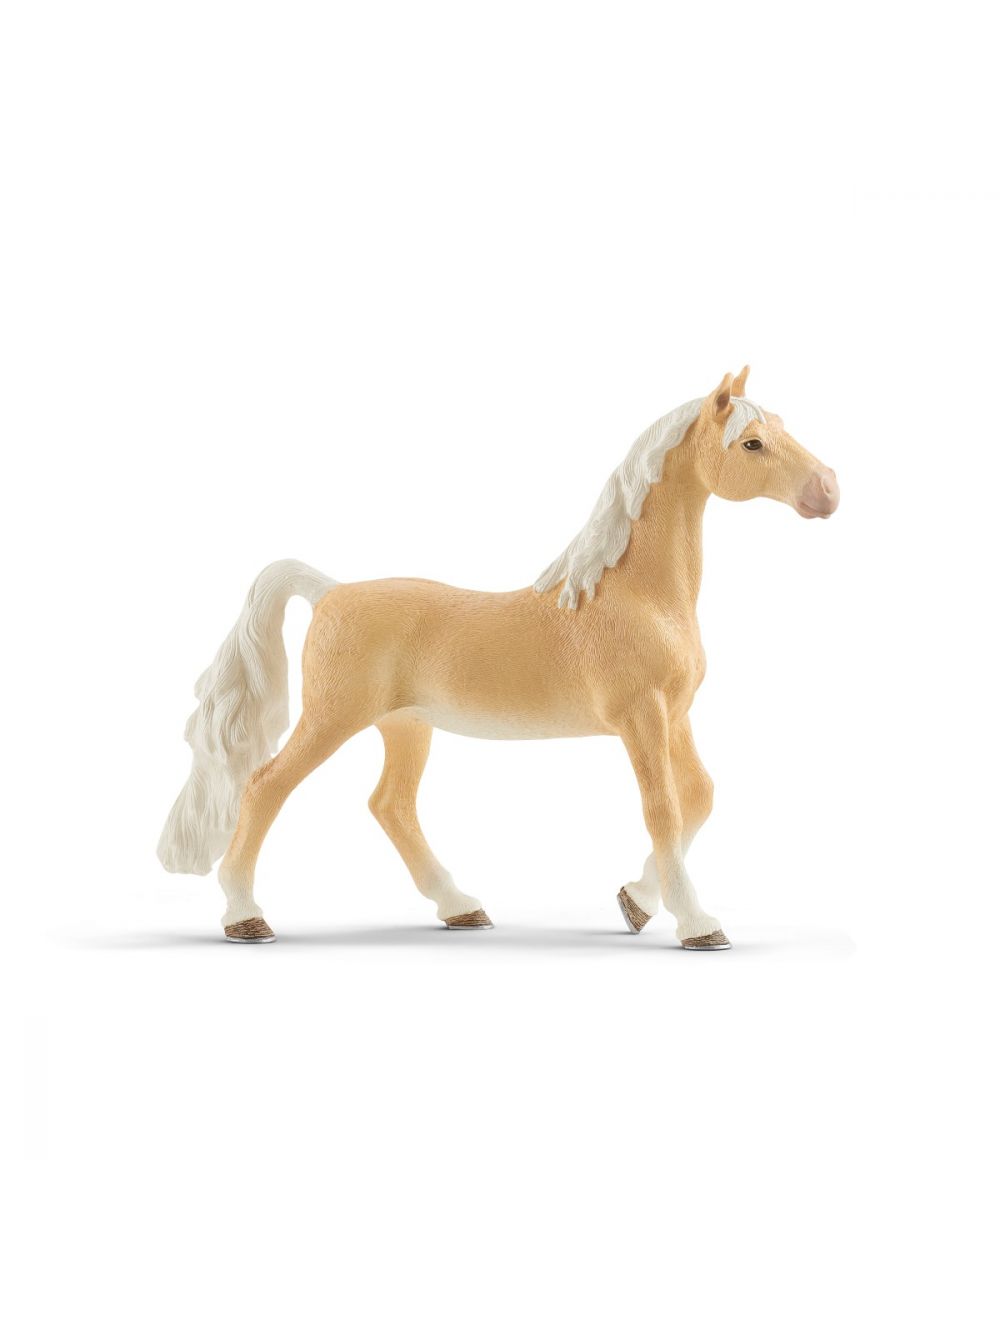 Schleich Horse 13912 American saddlebred mare